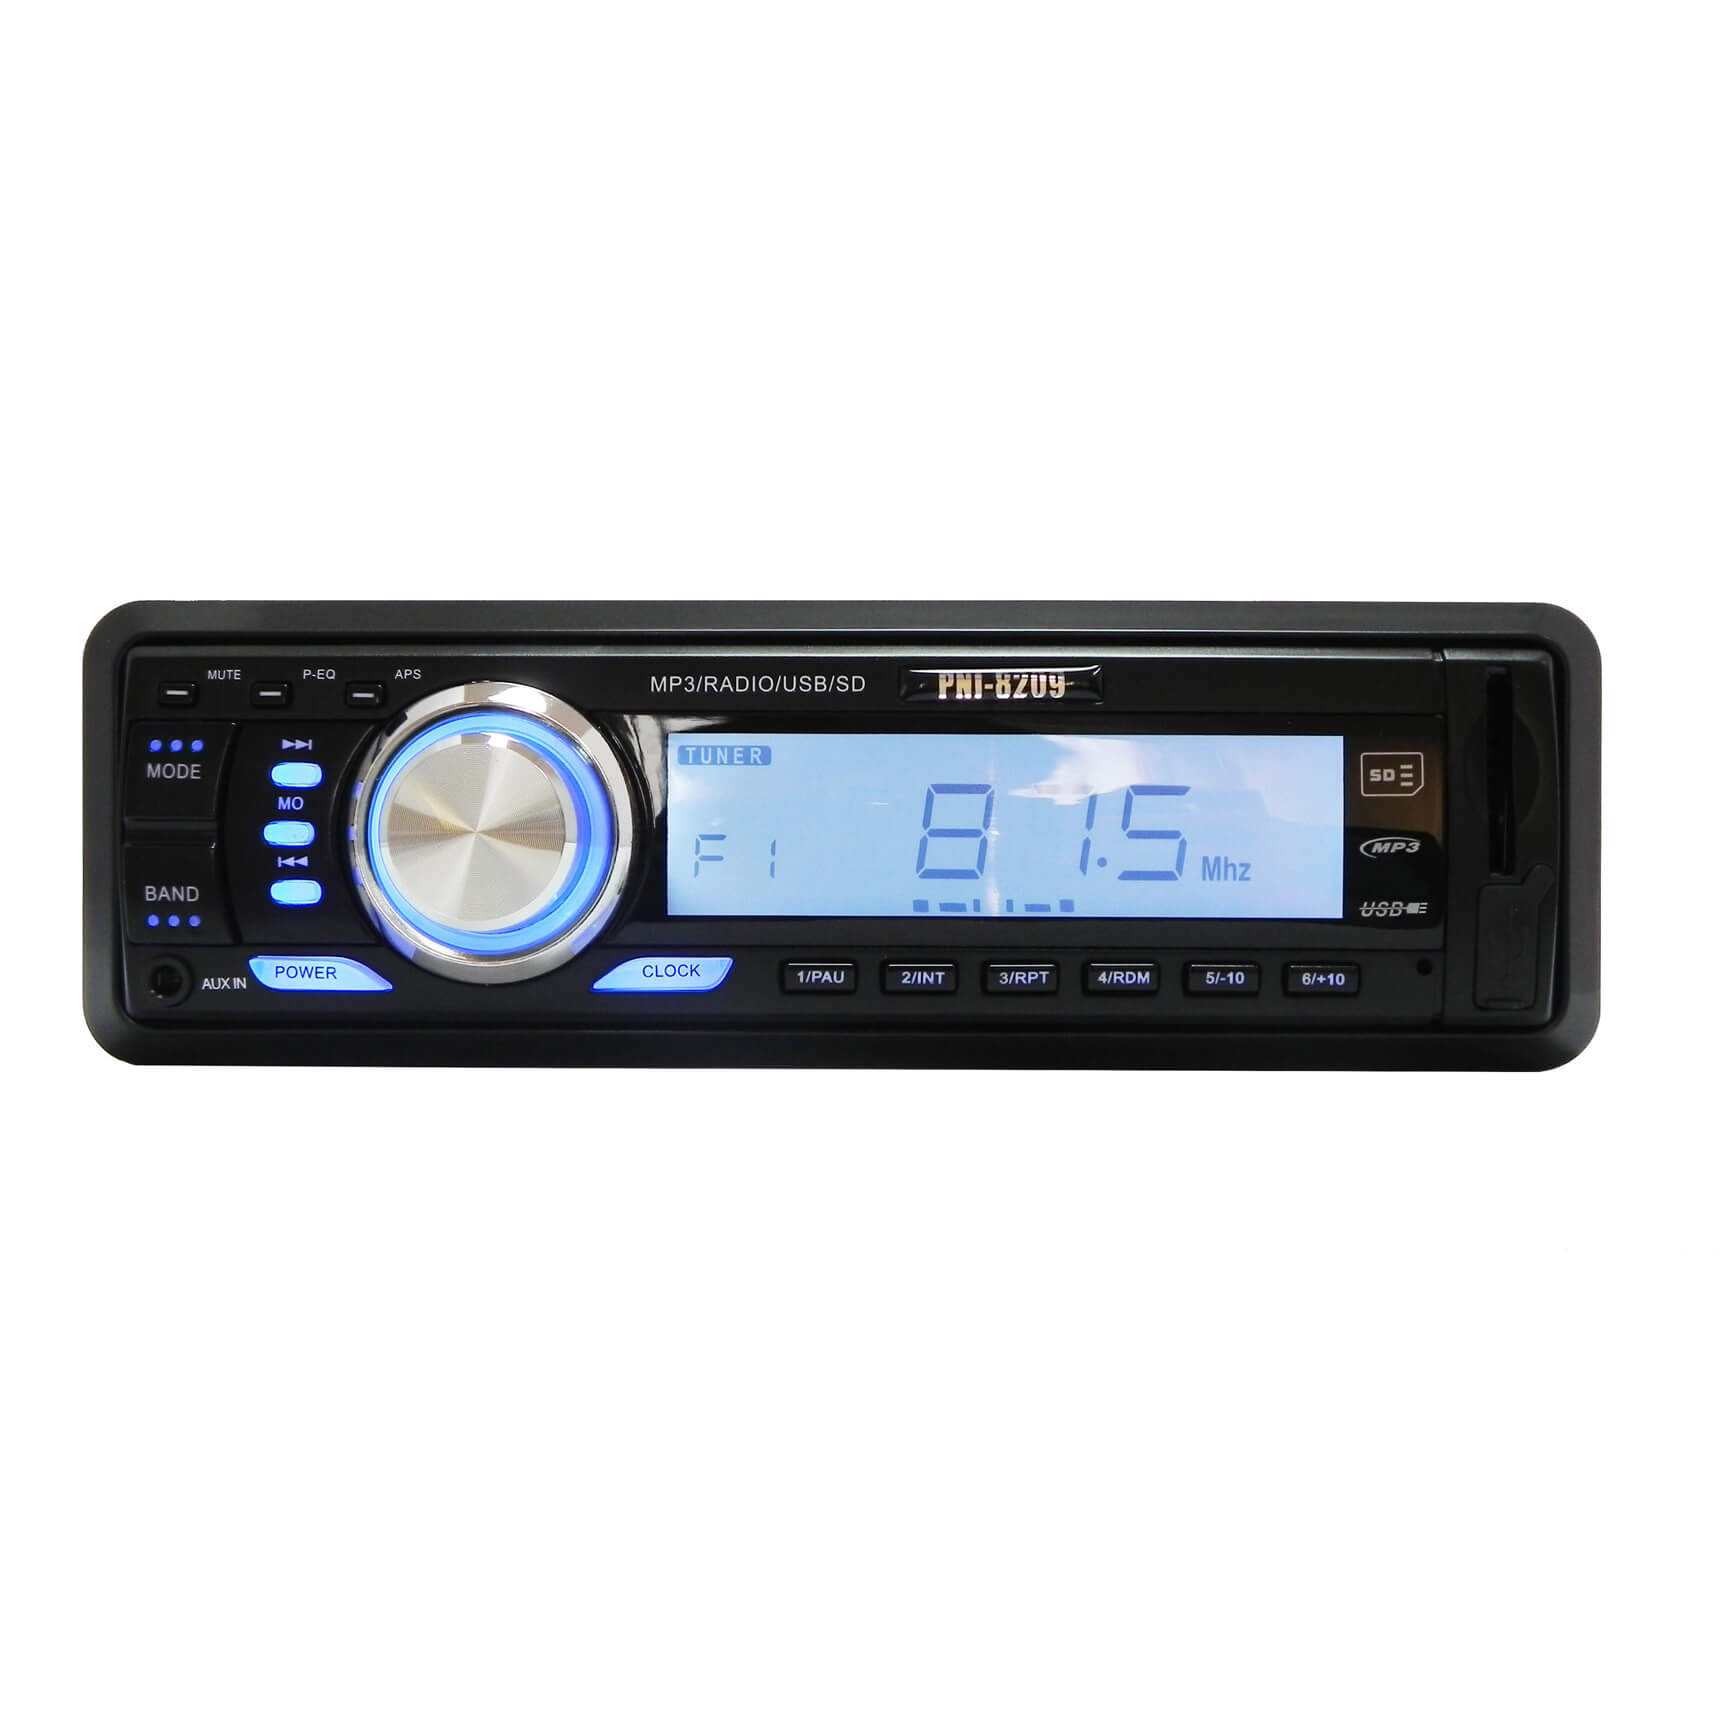  MP3 player auto PNI-8209, 4X40 W, USB, slot SD/MMC 